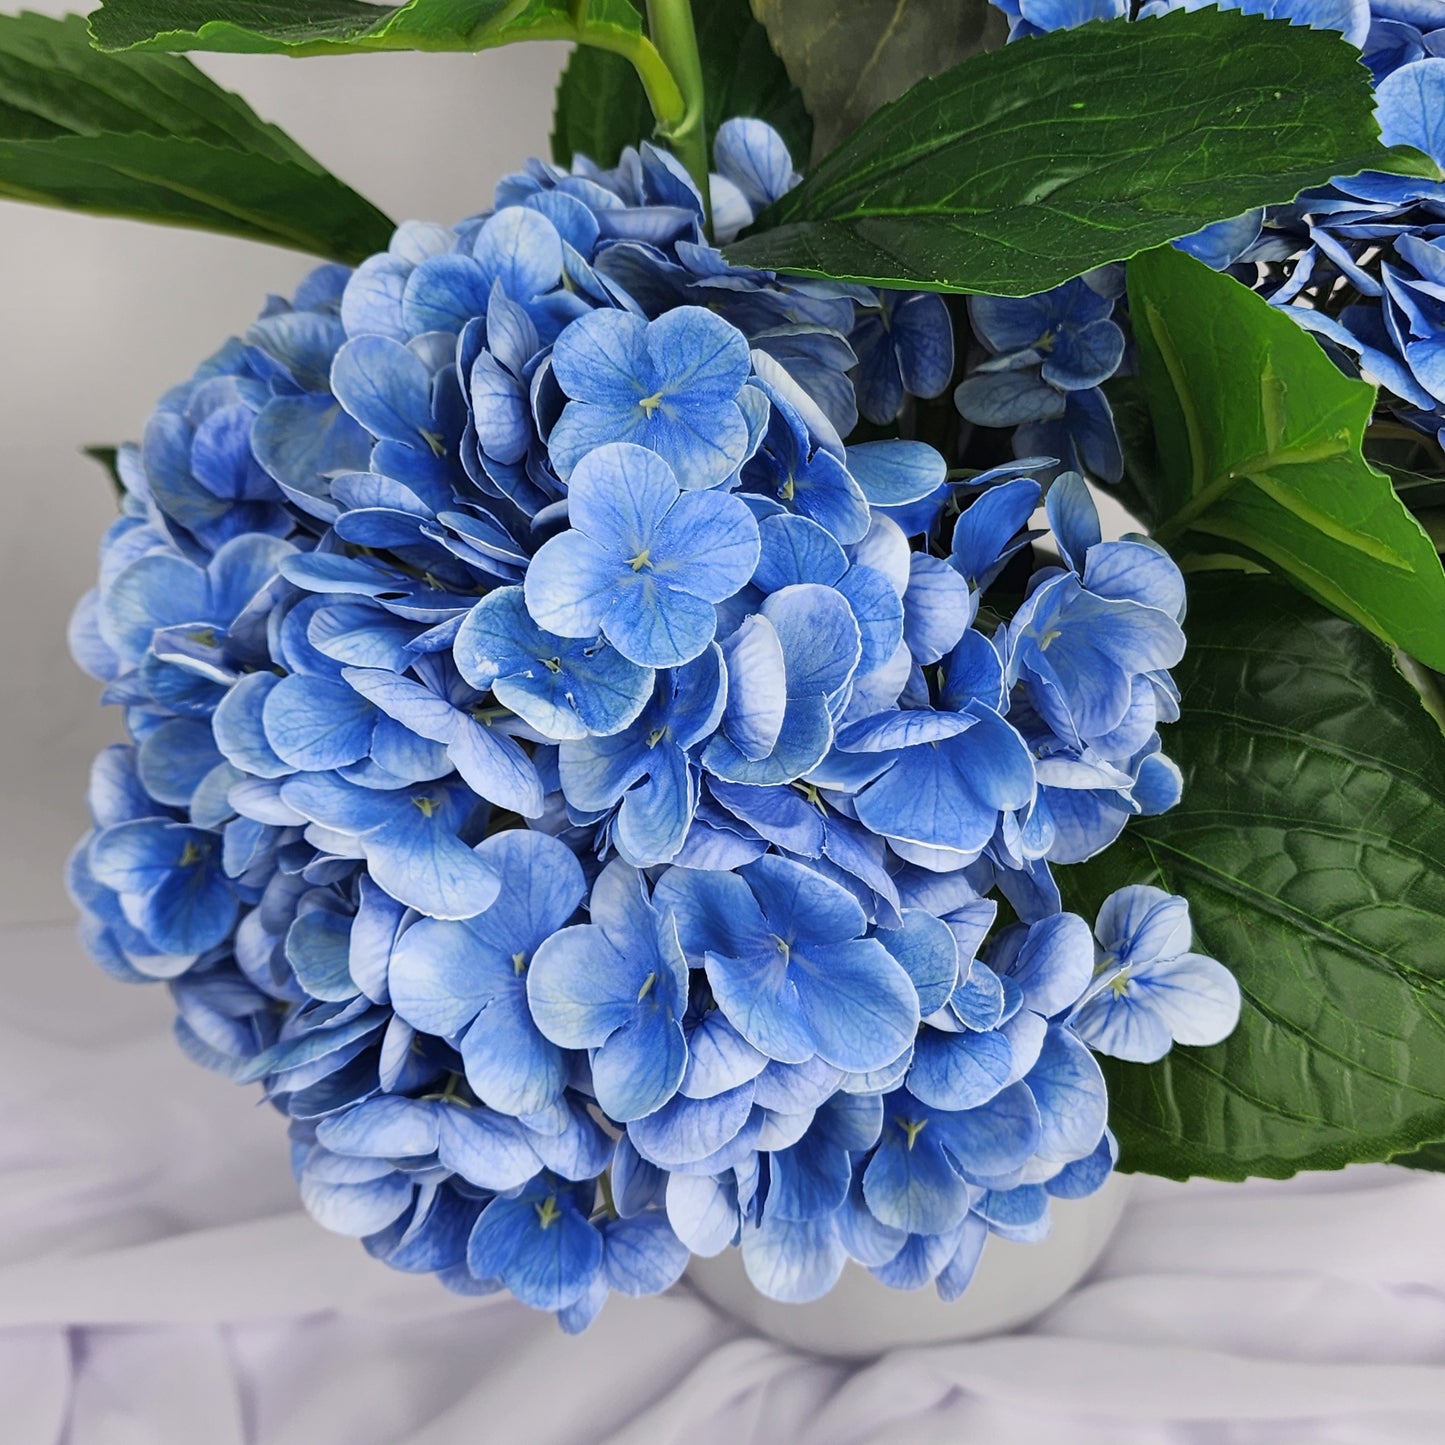 Dark Blue Hydrangeas in Ceramic Vase - Realistic Artificial Flowers